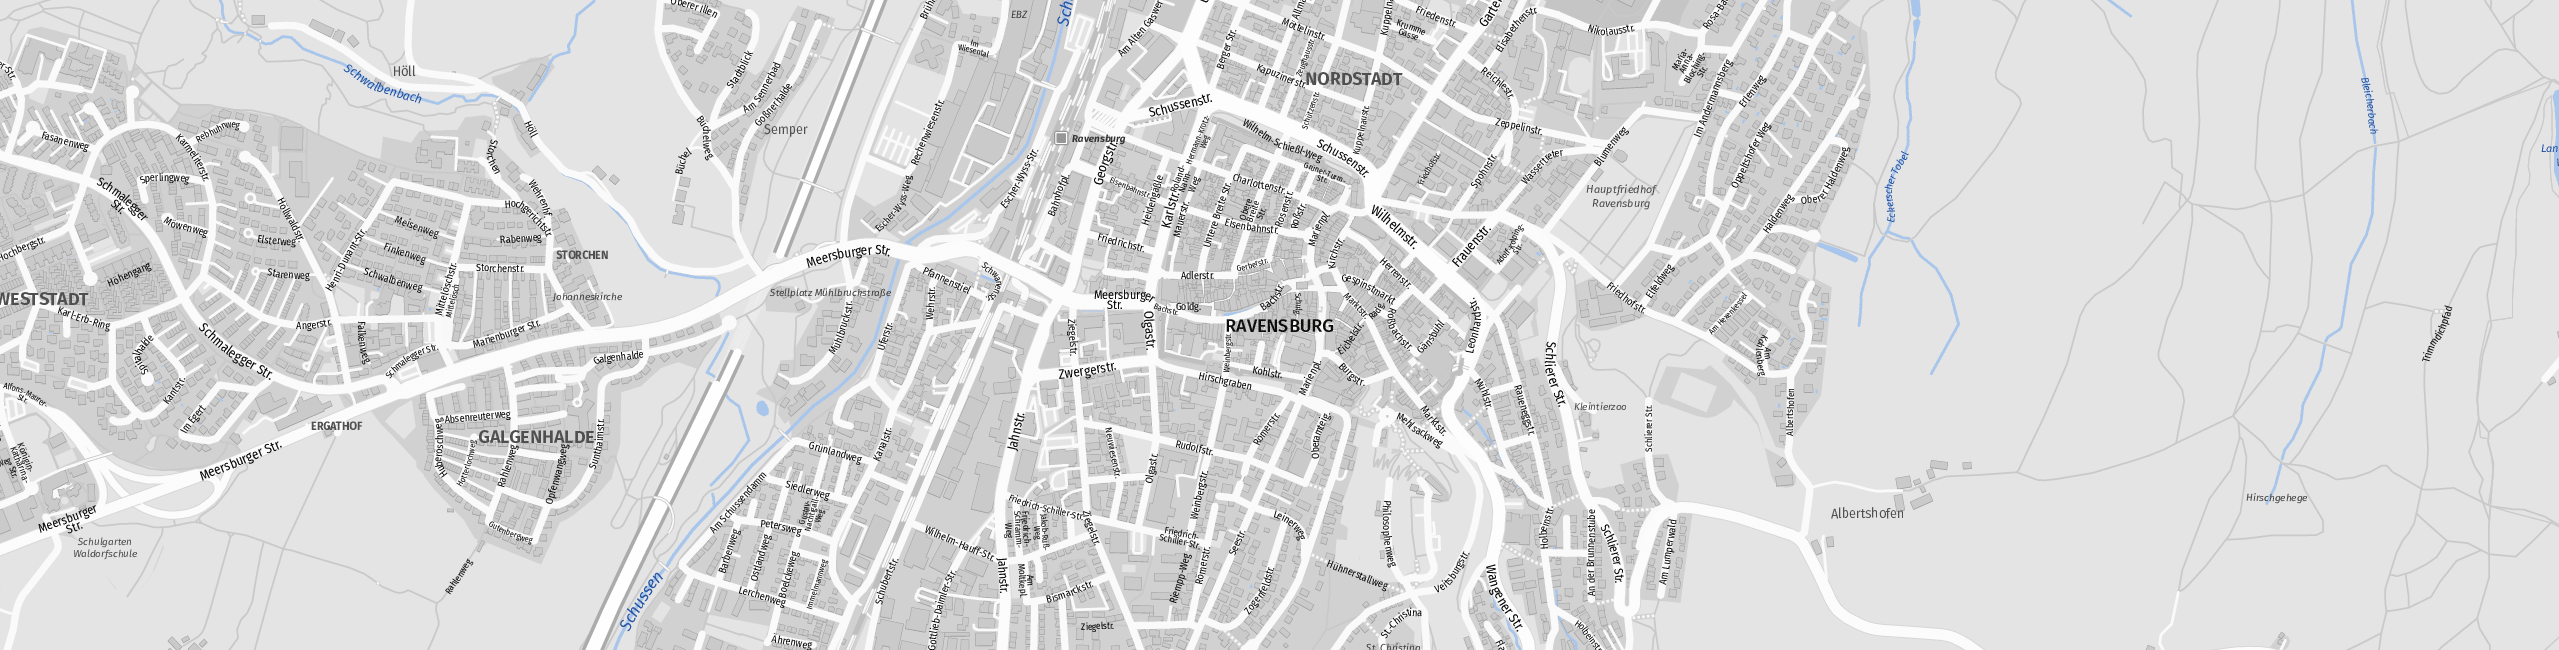 Stadtplan Ravensburg zum Downloaden.